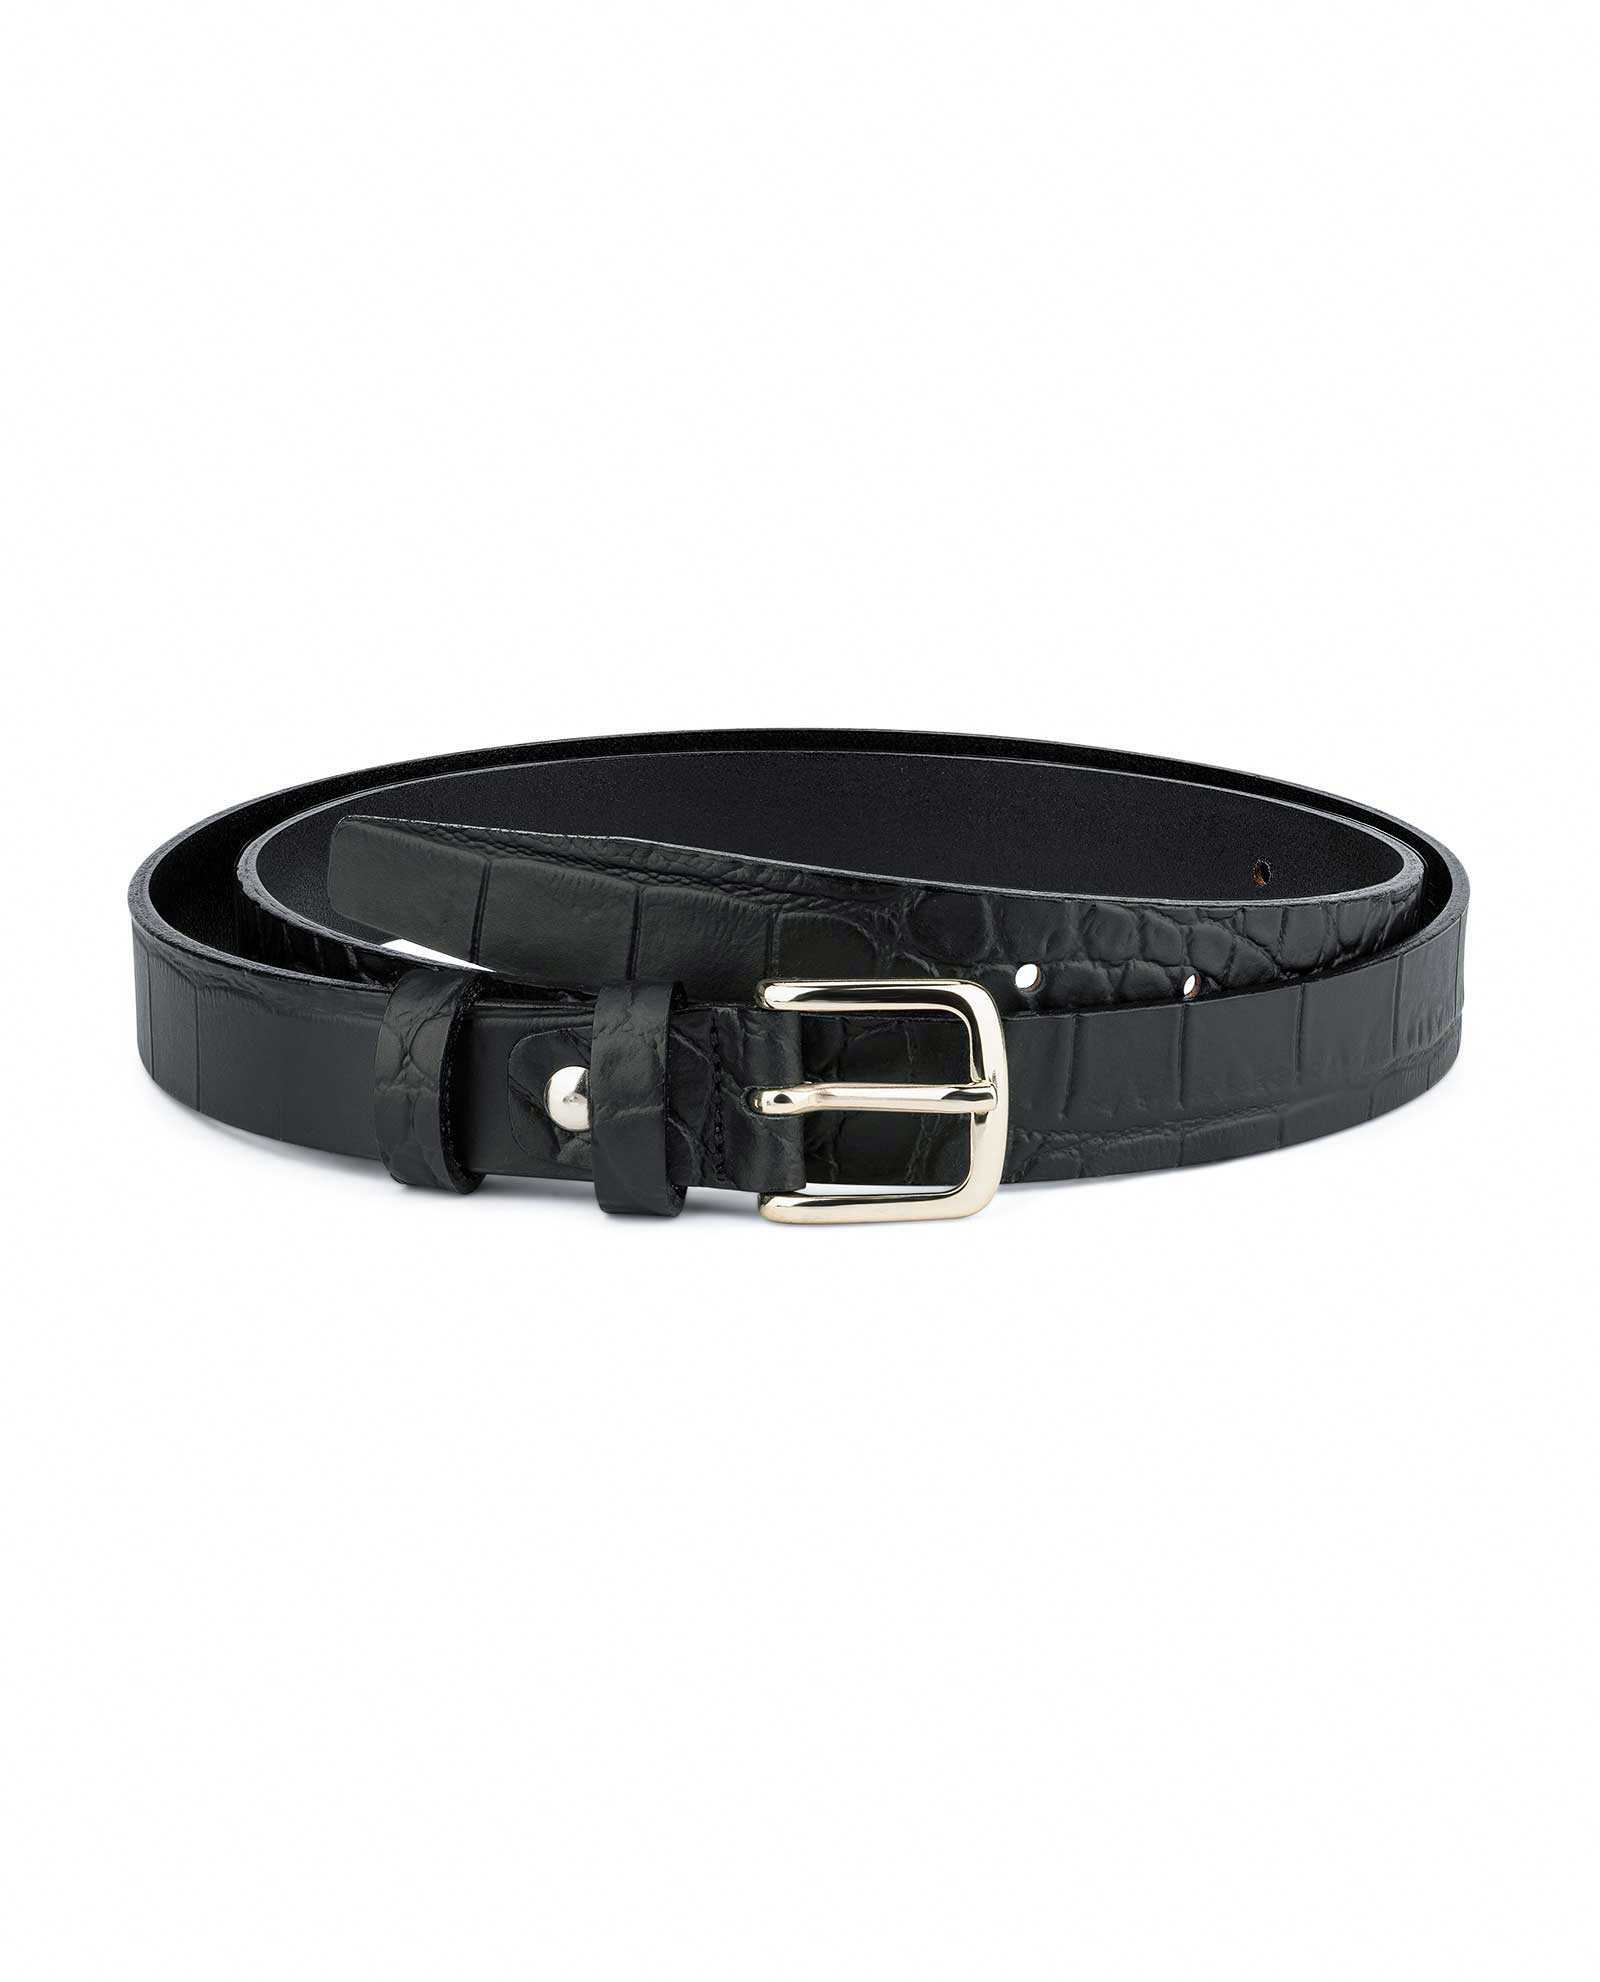 https://leatherbeltsonline.com/wp-content/uploads/2019/07/1-inch-Croco-Mens-Skinny-Belt-25-mm-Capo-Pelle-Main-picture.jpg